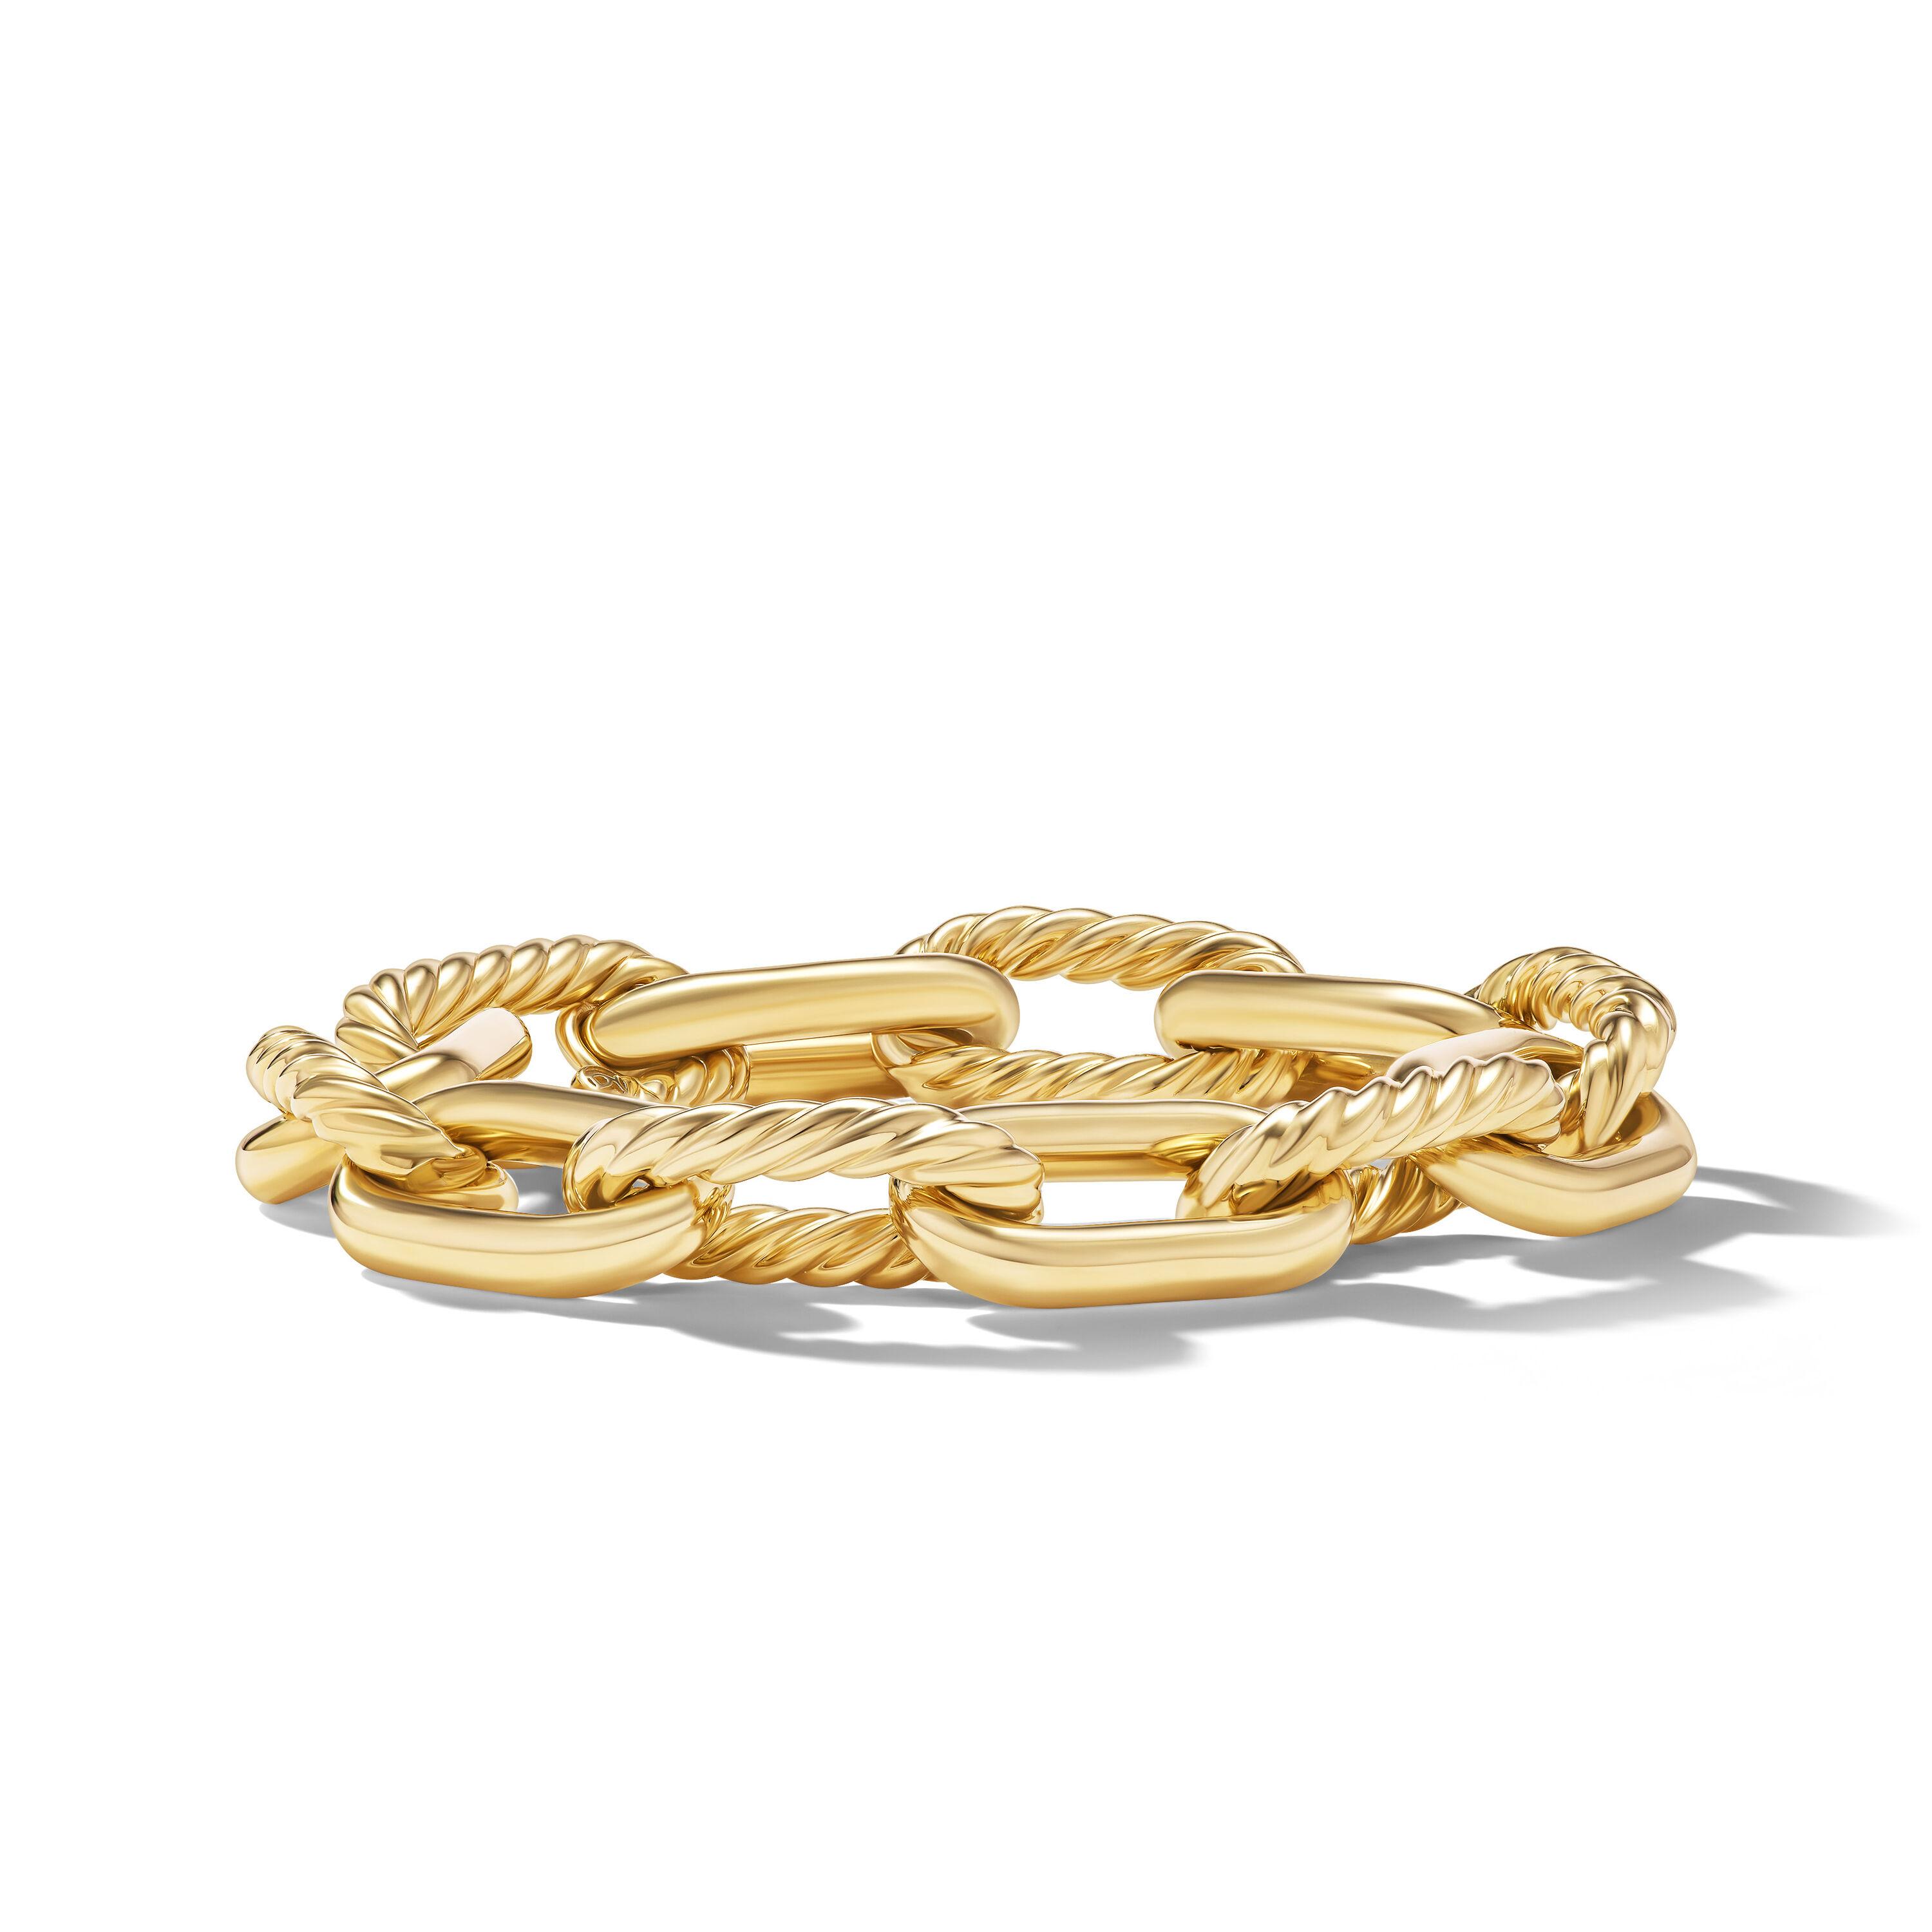 David Yurman 13.5mm Madison Chain Bracelet in 18k Yellow Gold, Size Large 0